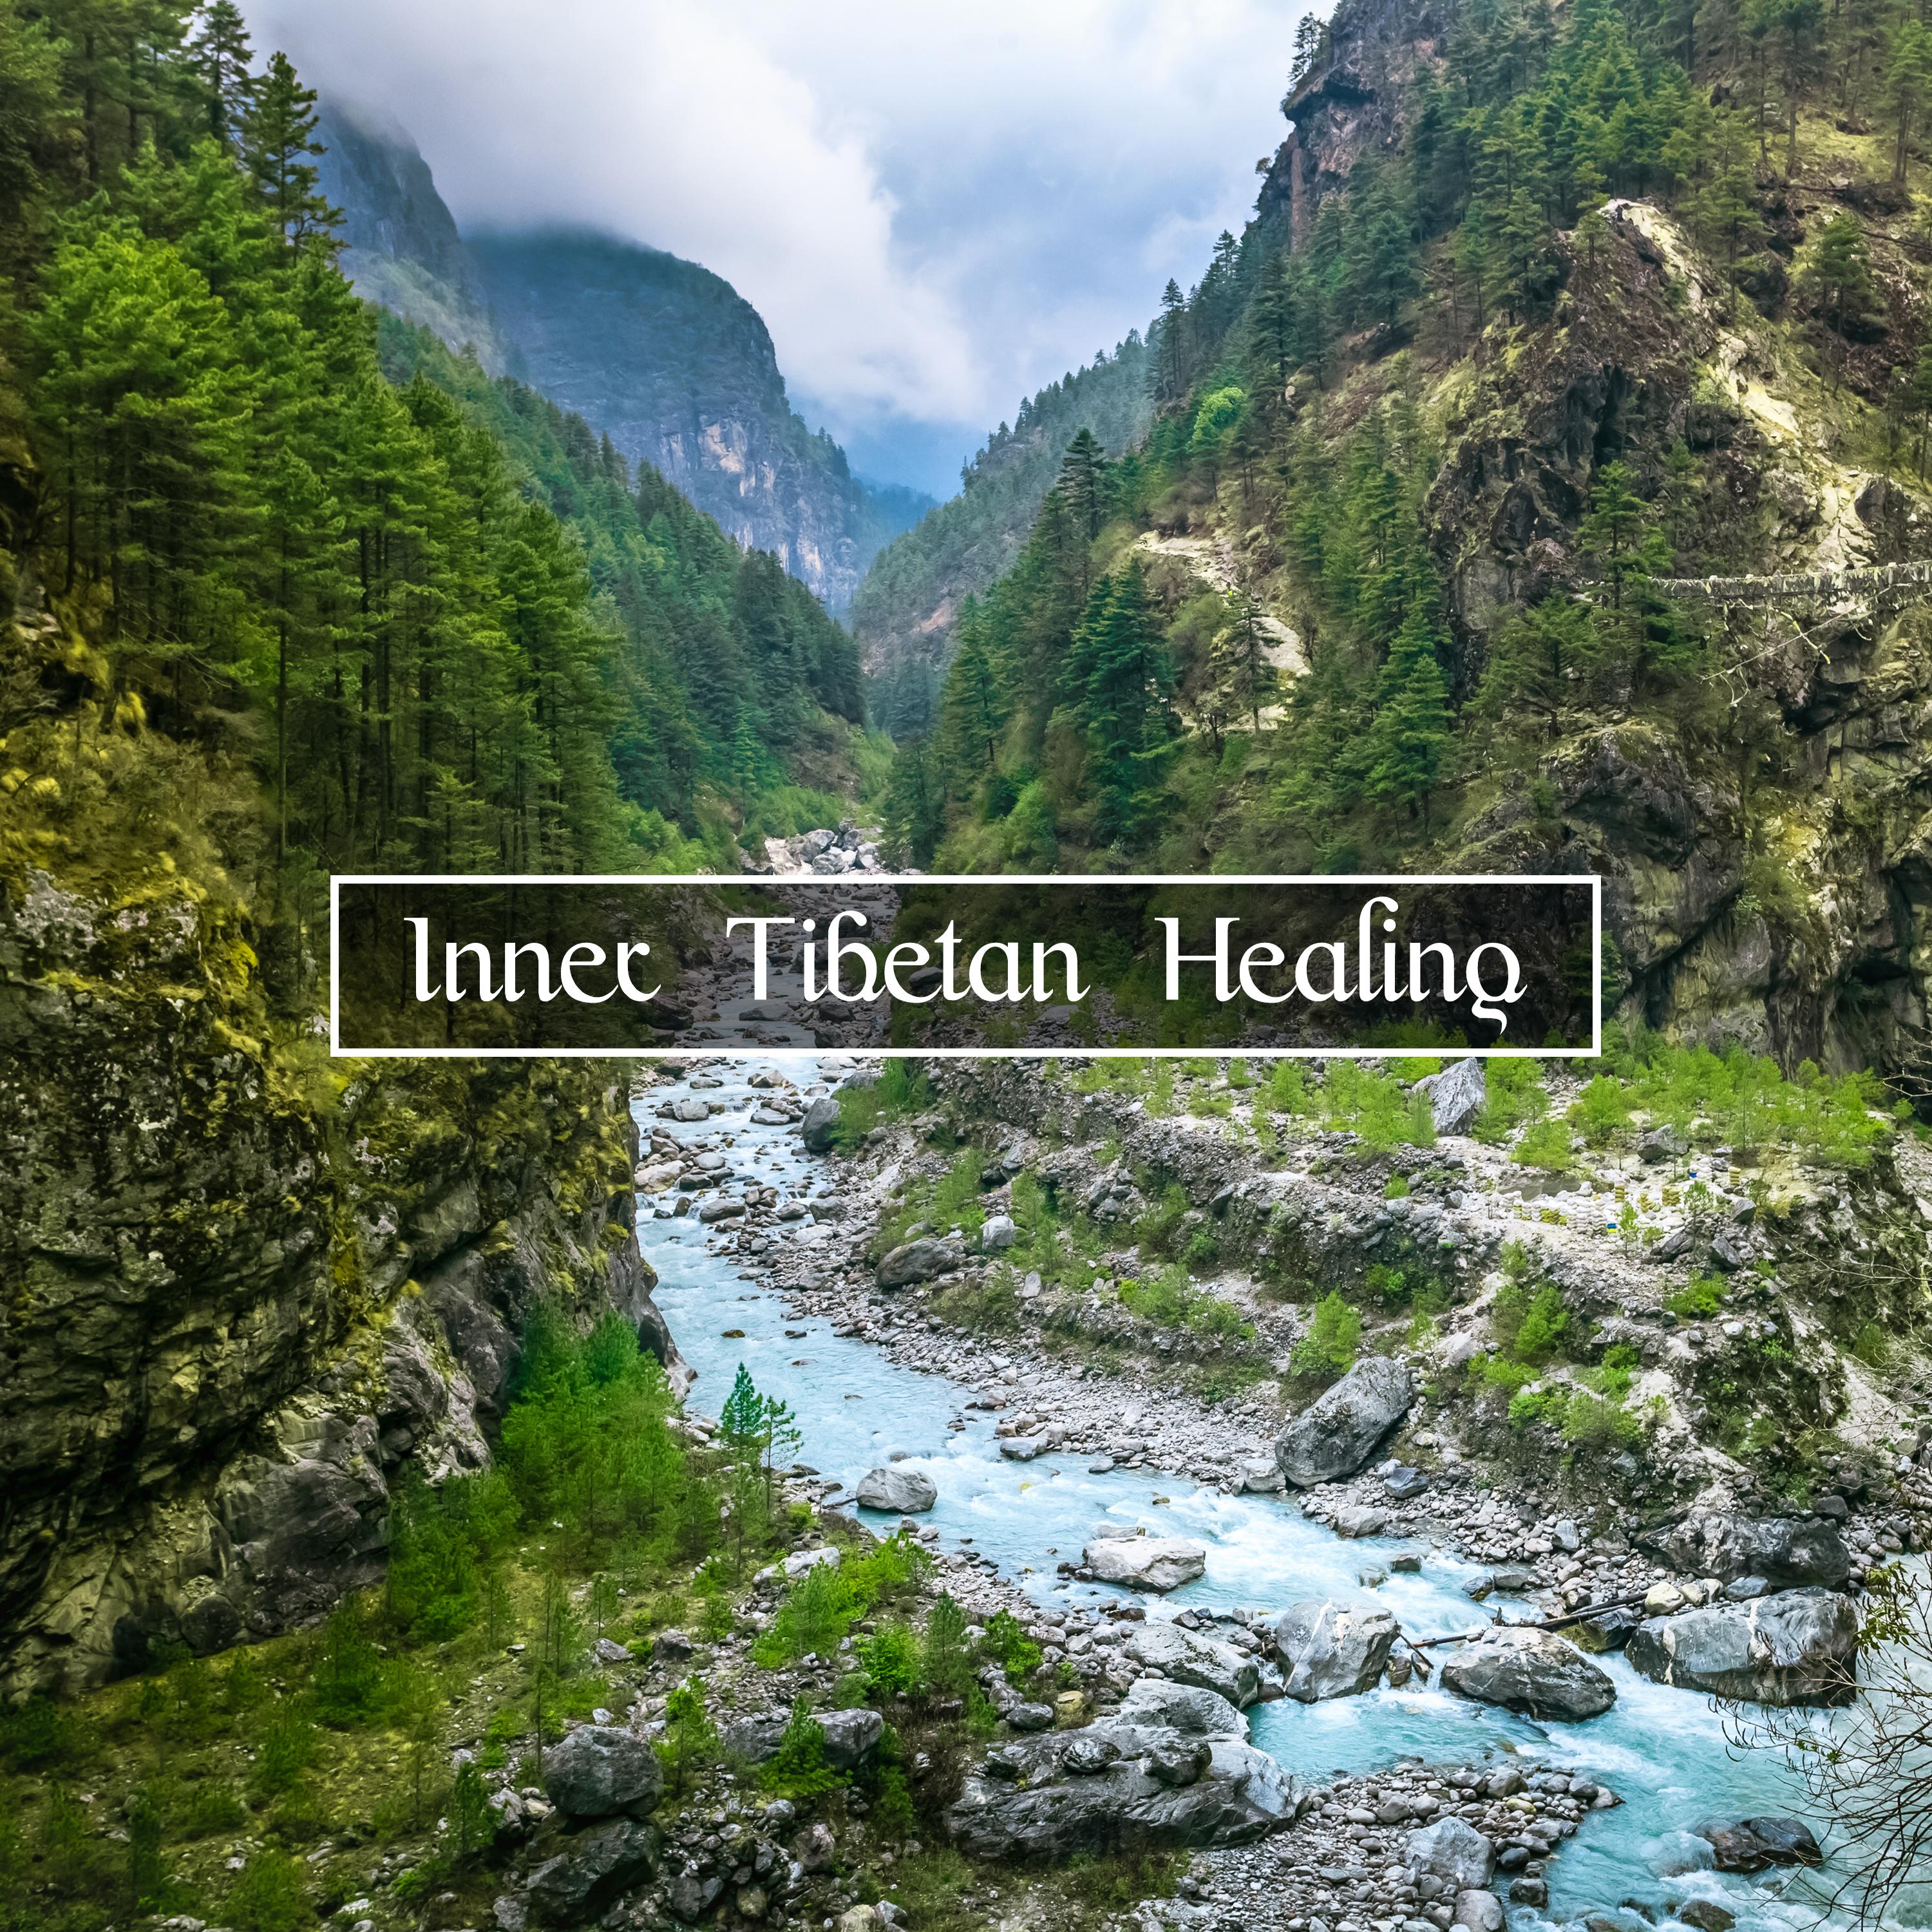 Healing Spiritual Release